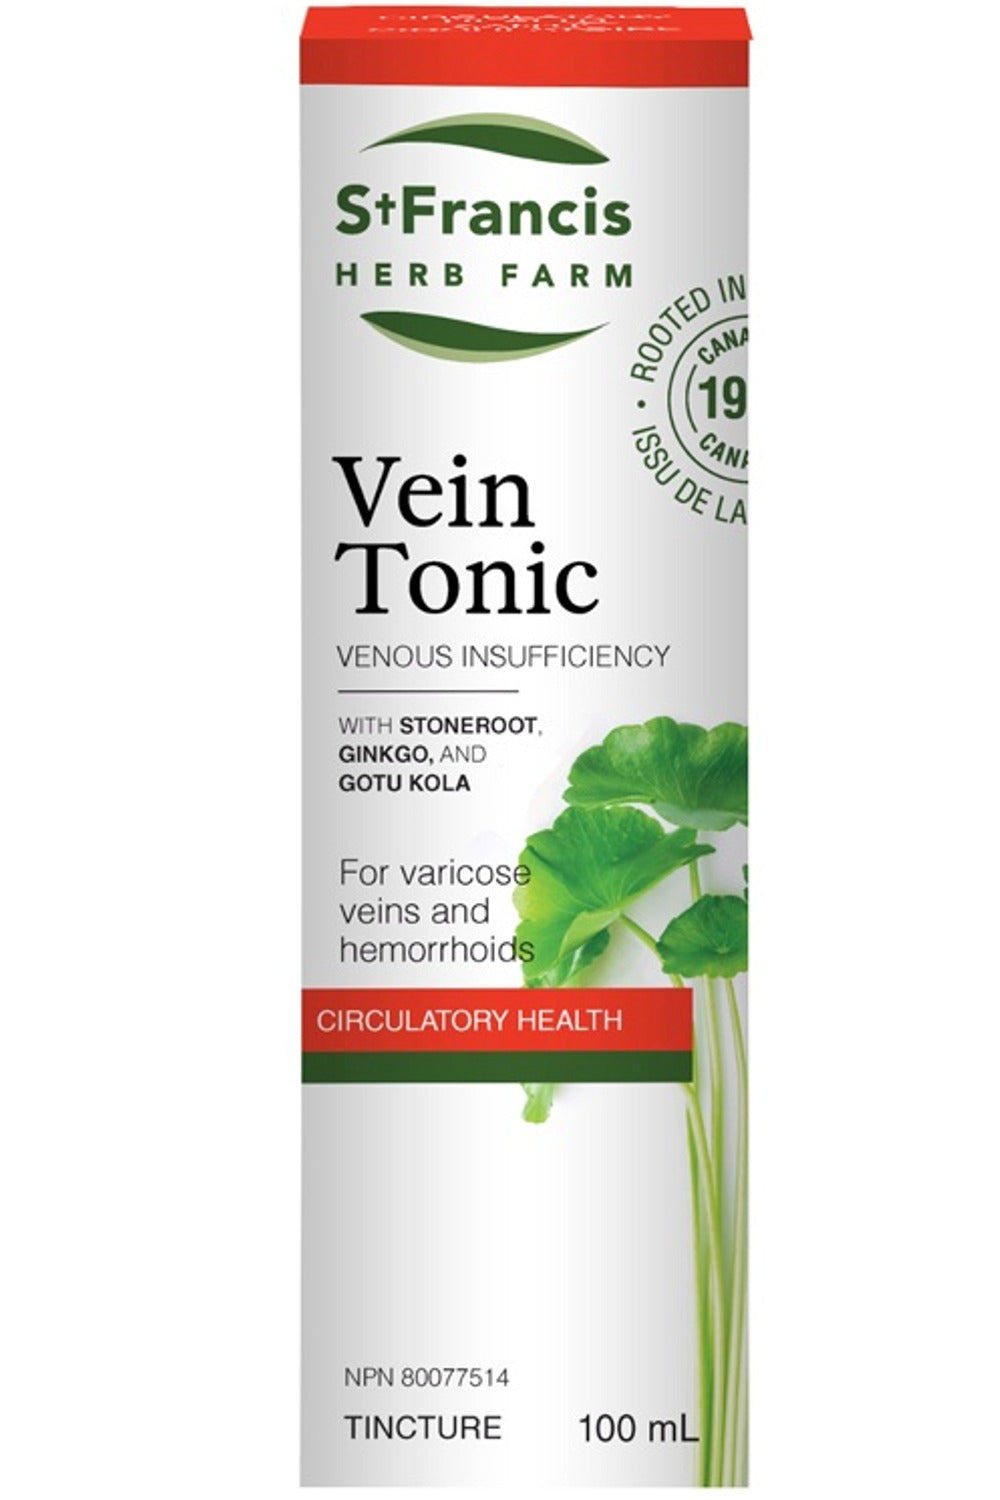 ST FRANCIS HERB FARM Vein Tonic (100 ml)